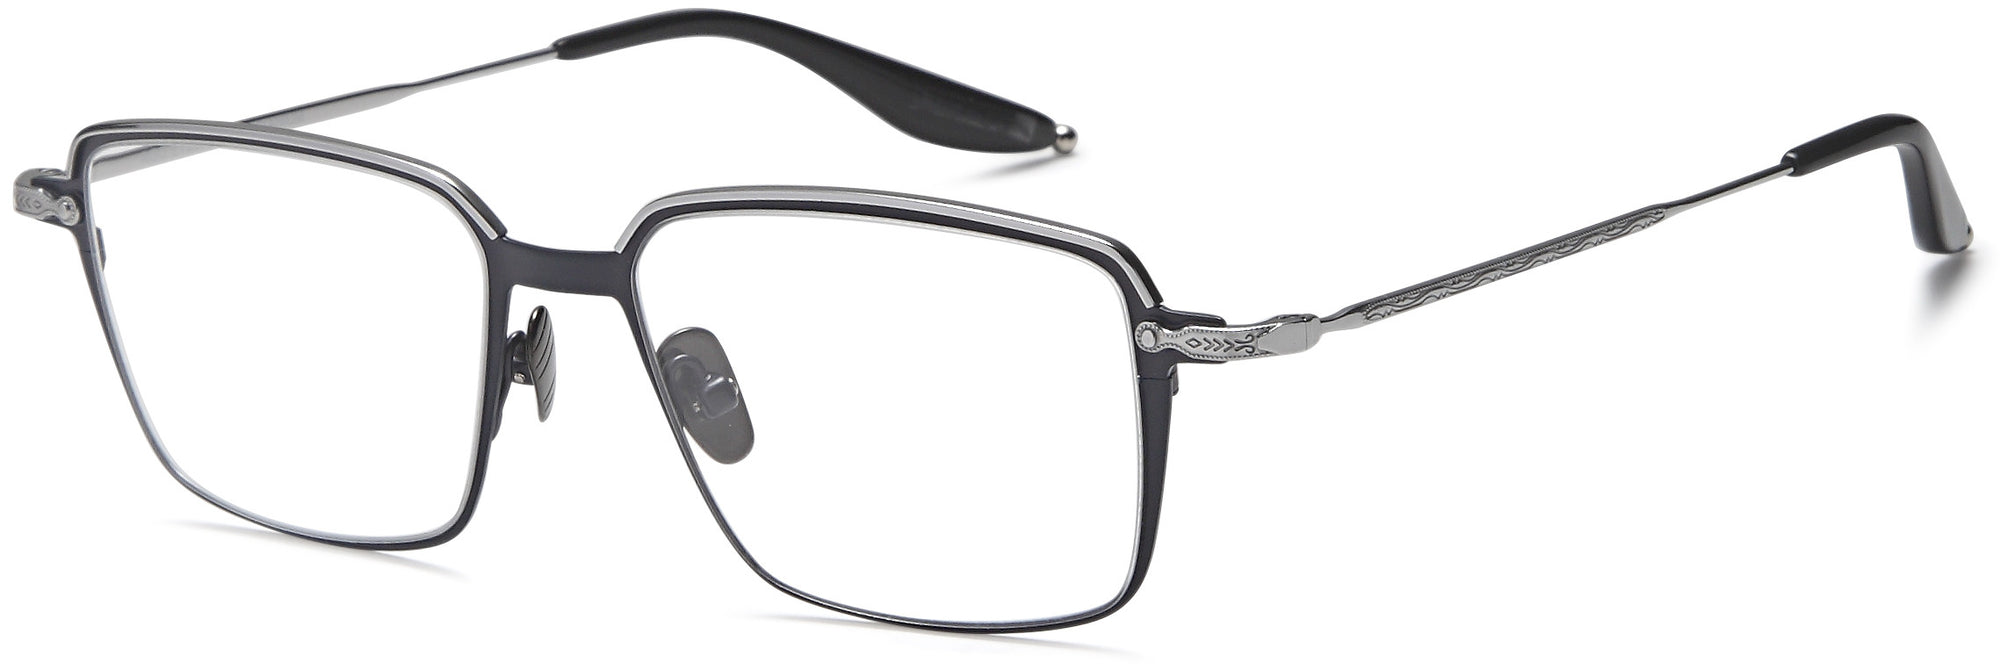 AGO Eyeglasses AGOT704